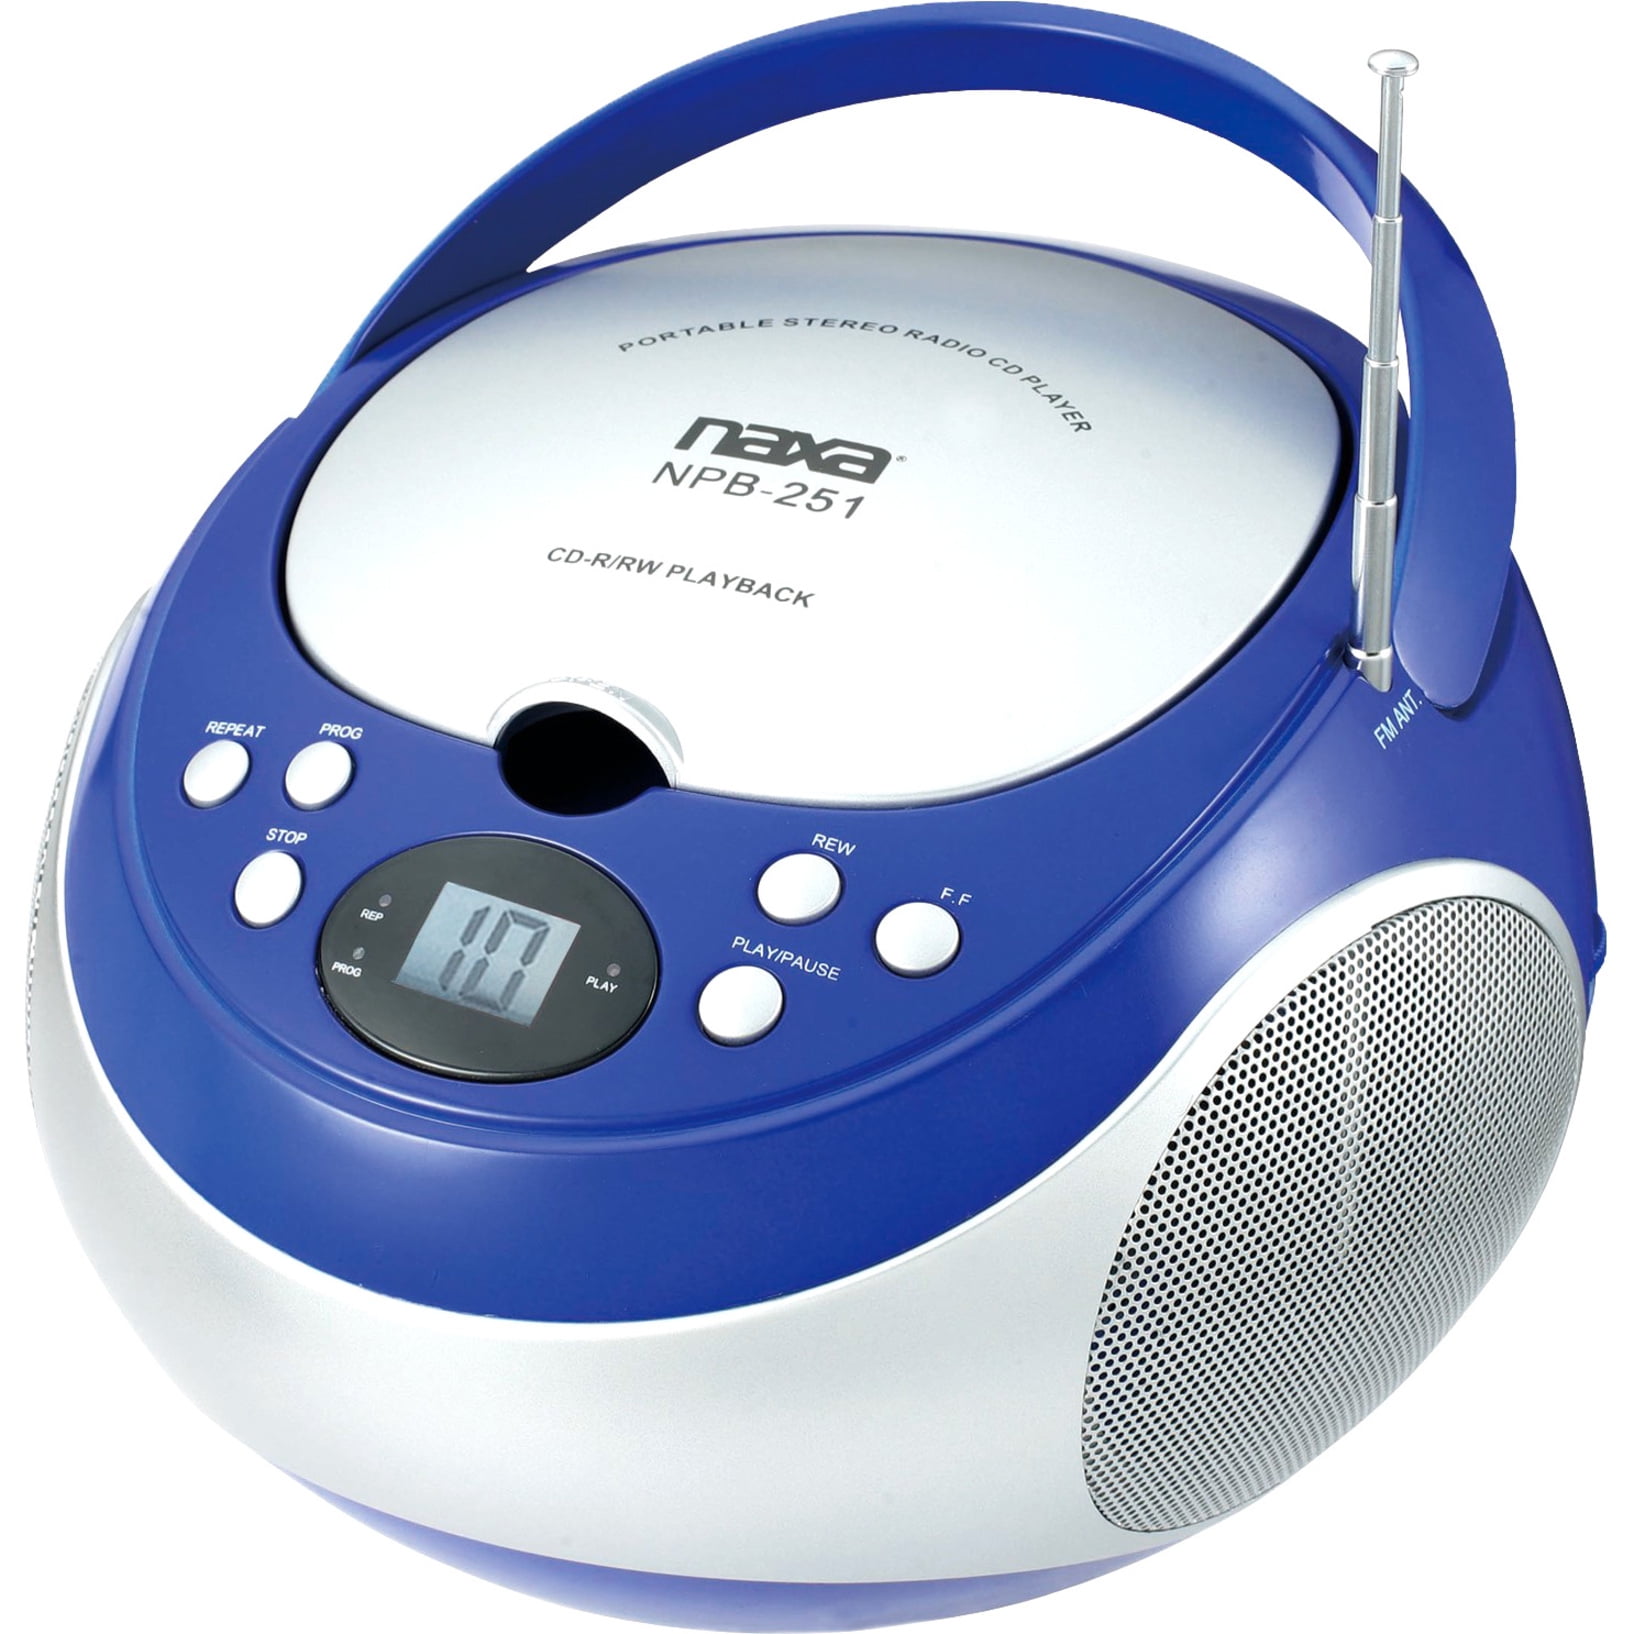 Cd mp3 player. CD-плеер Бумбокс,Bluetooth CD-плеер динамики стереофонический. Naxa NPB 251 Portable CD Player with am/fm Radio. CD Player kd950. Mp3 плеер Бумбокс Hyundai.